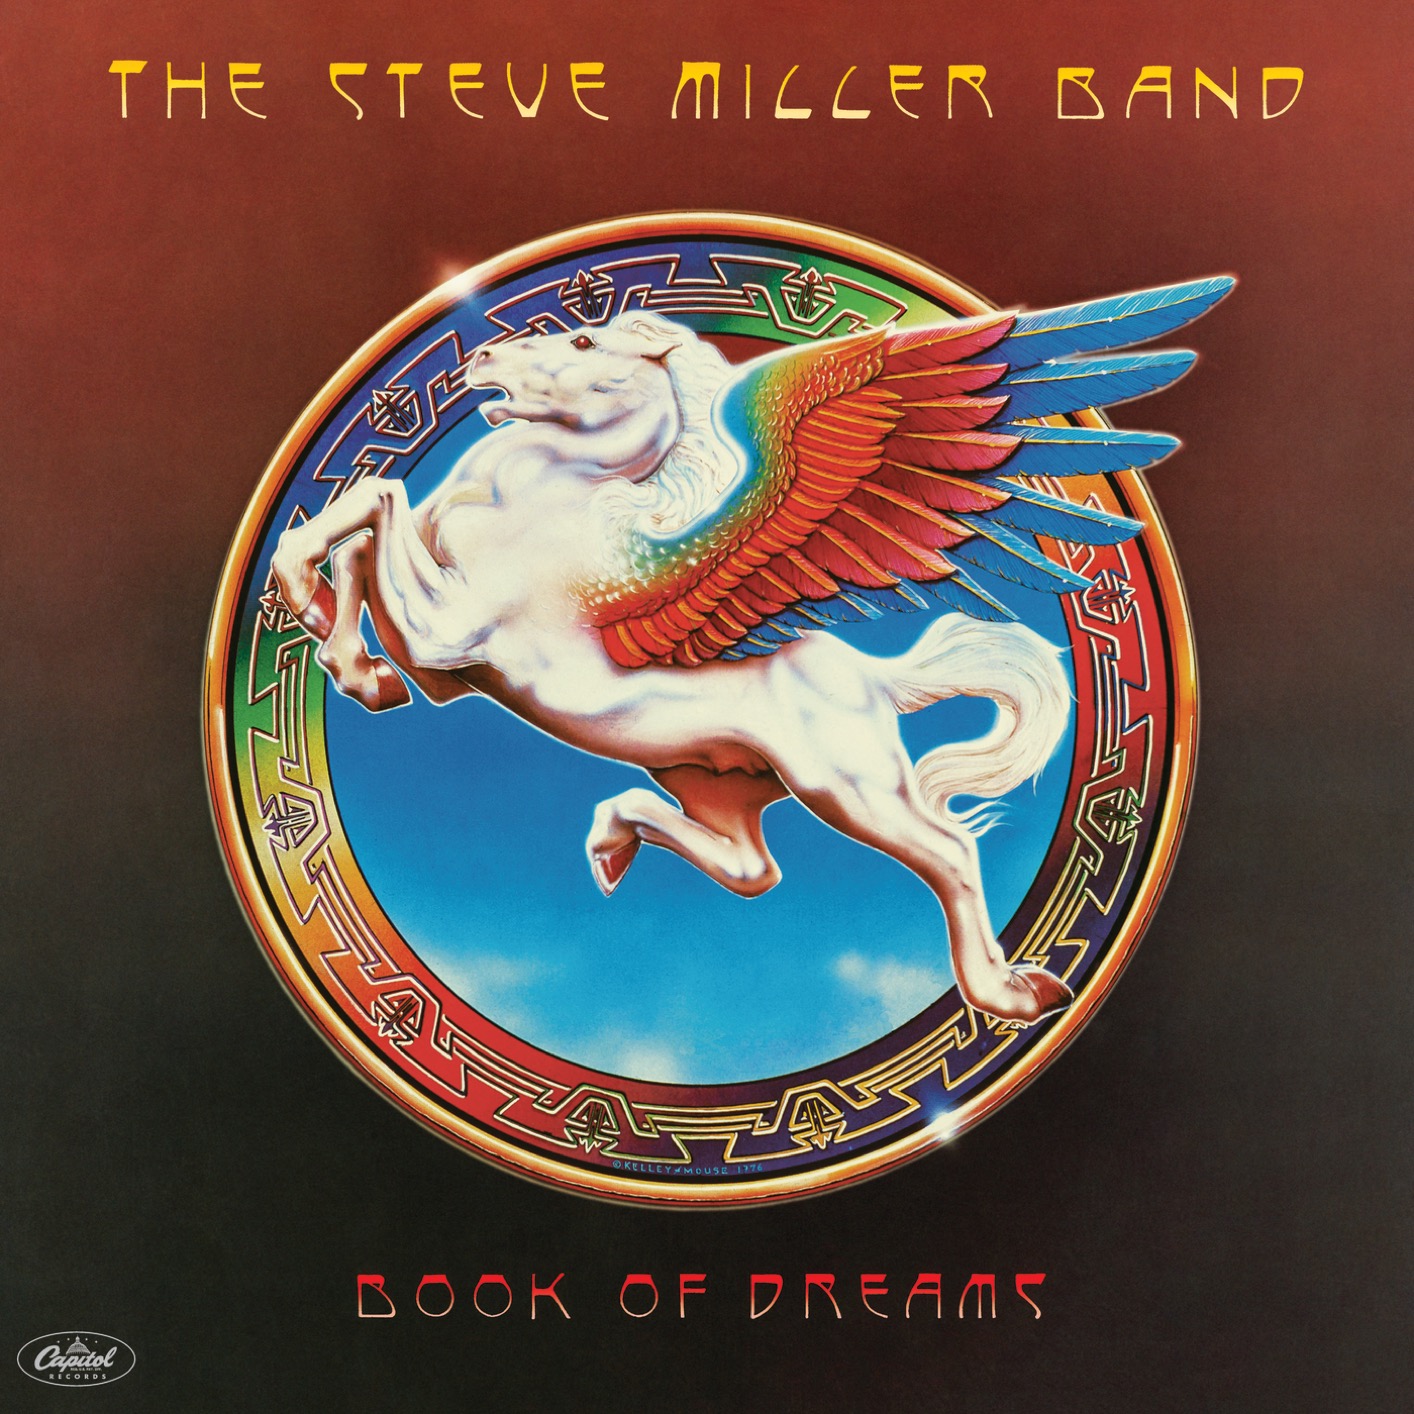 Steve Miller Band - Book Of Dreams (Remastered) (1977/2019) [FLAC 24bit/96kHz]